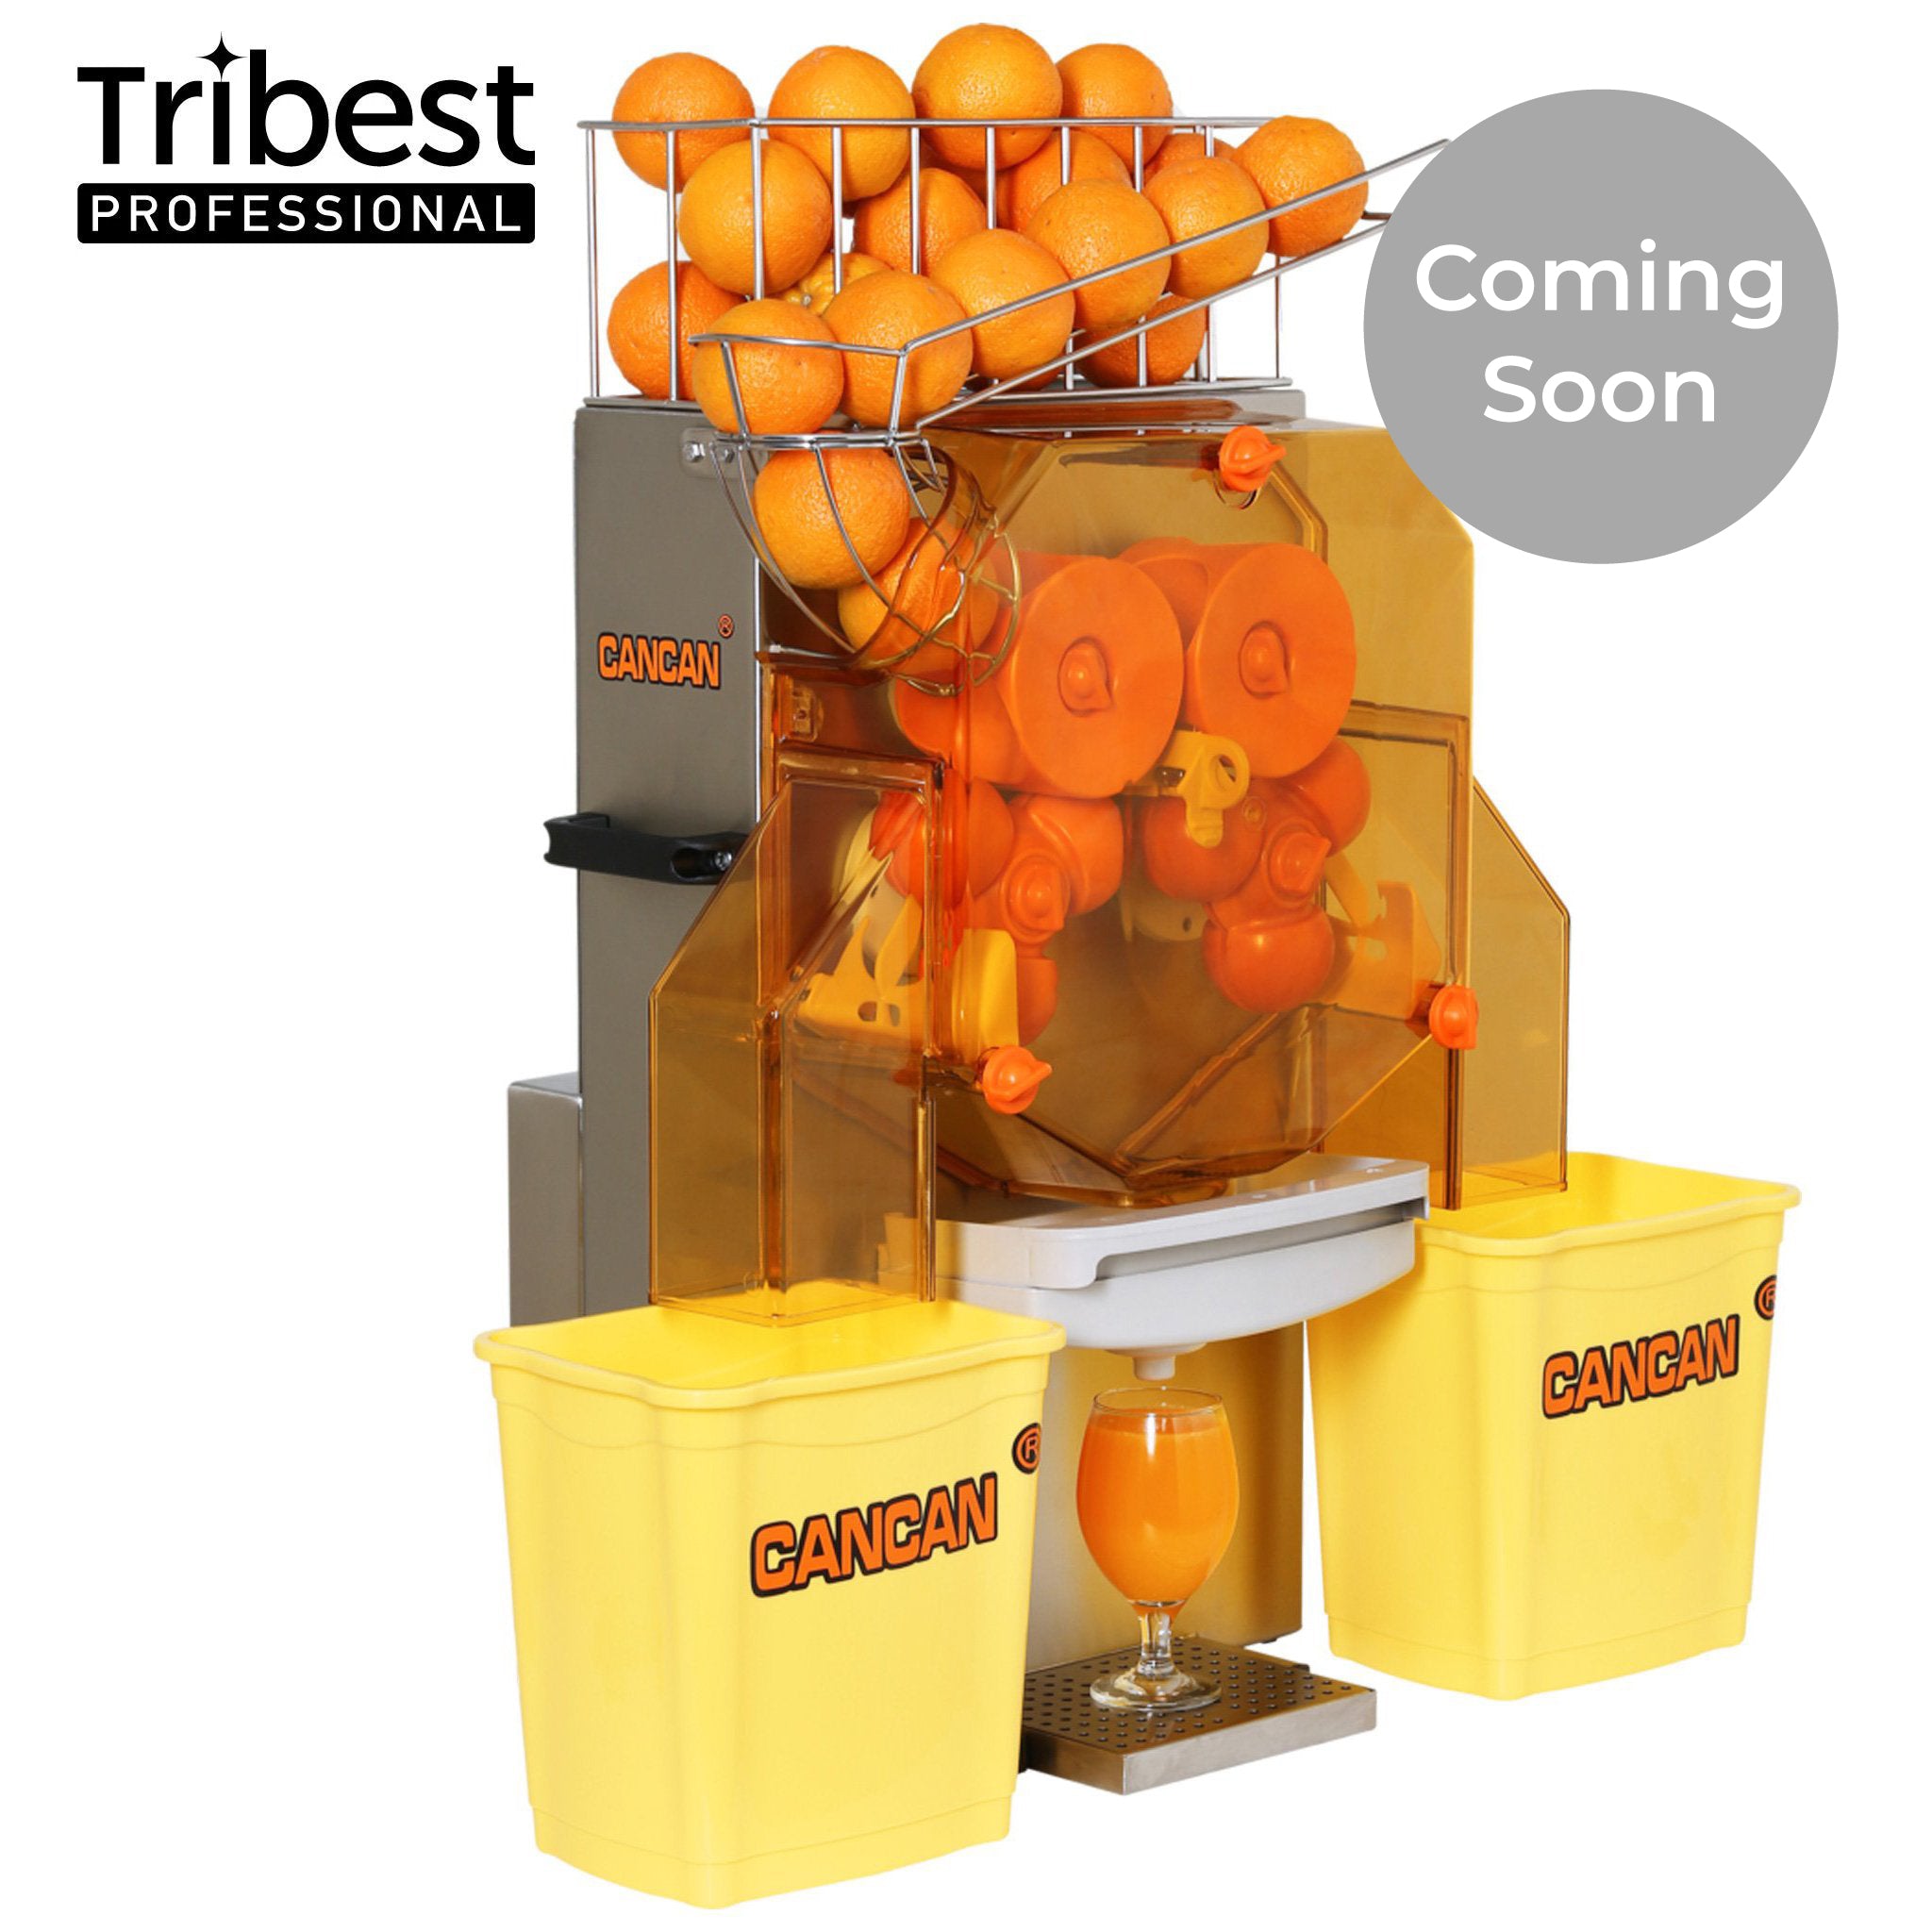 Cancan® Automatic Orange Juicer